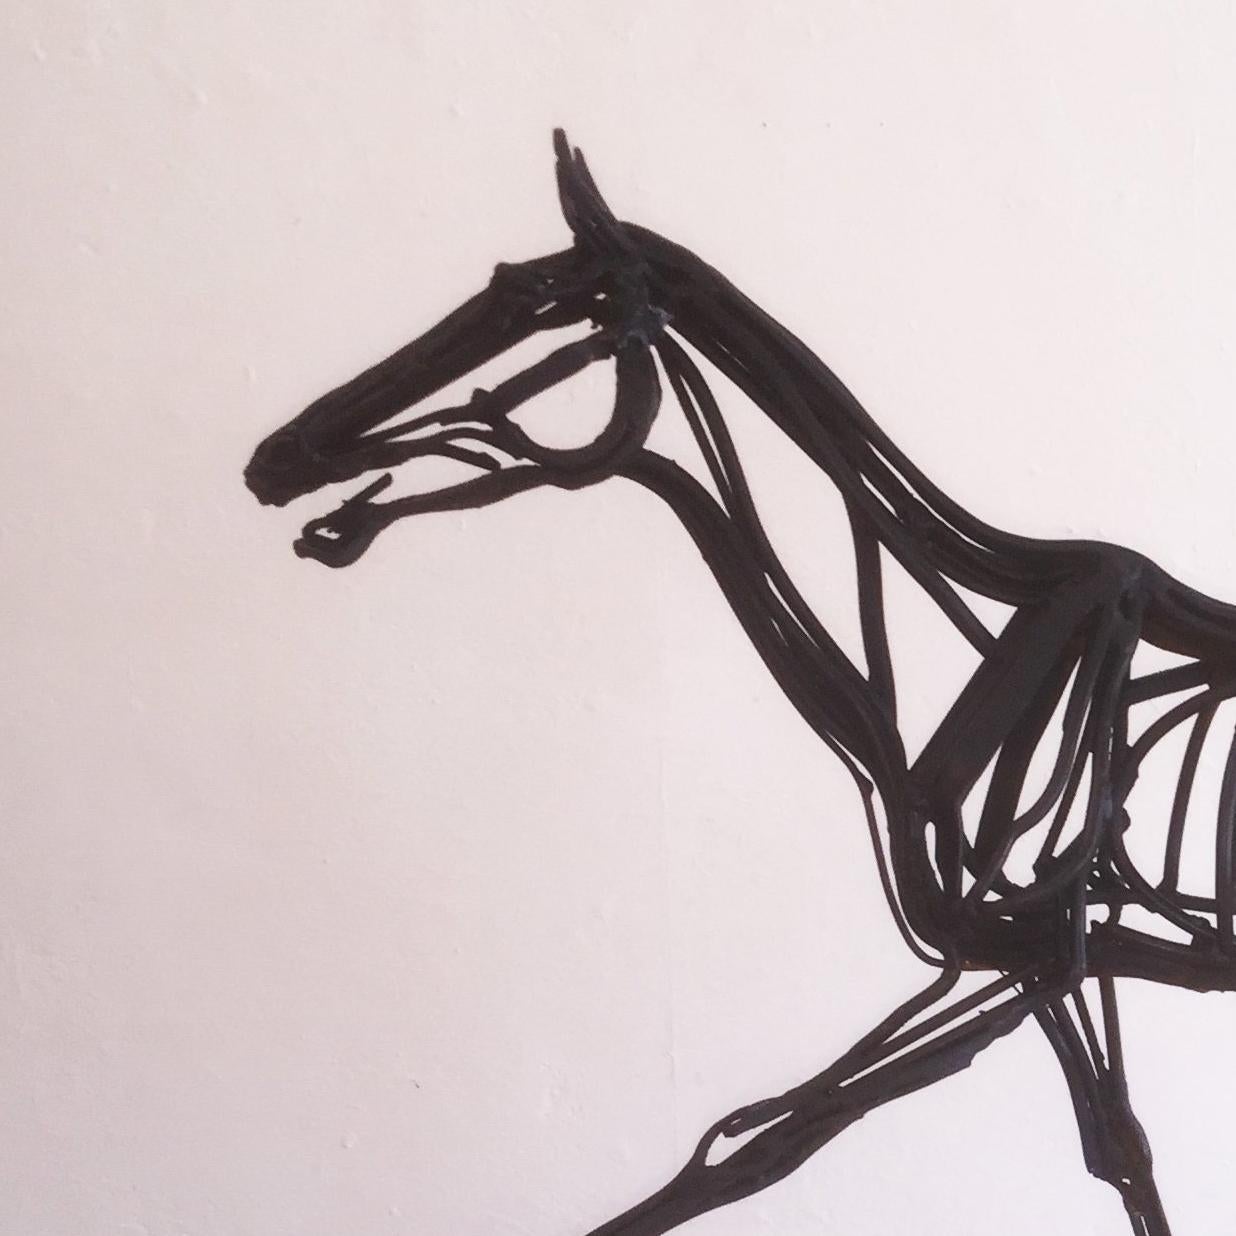 Gallop - Sculpture by Wendy Klemperer